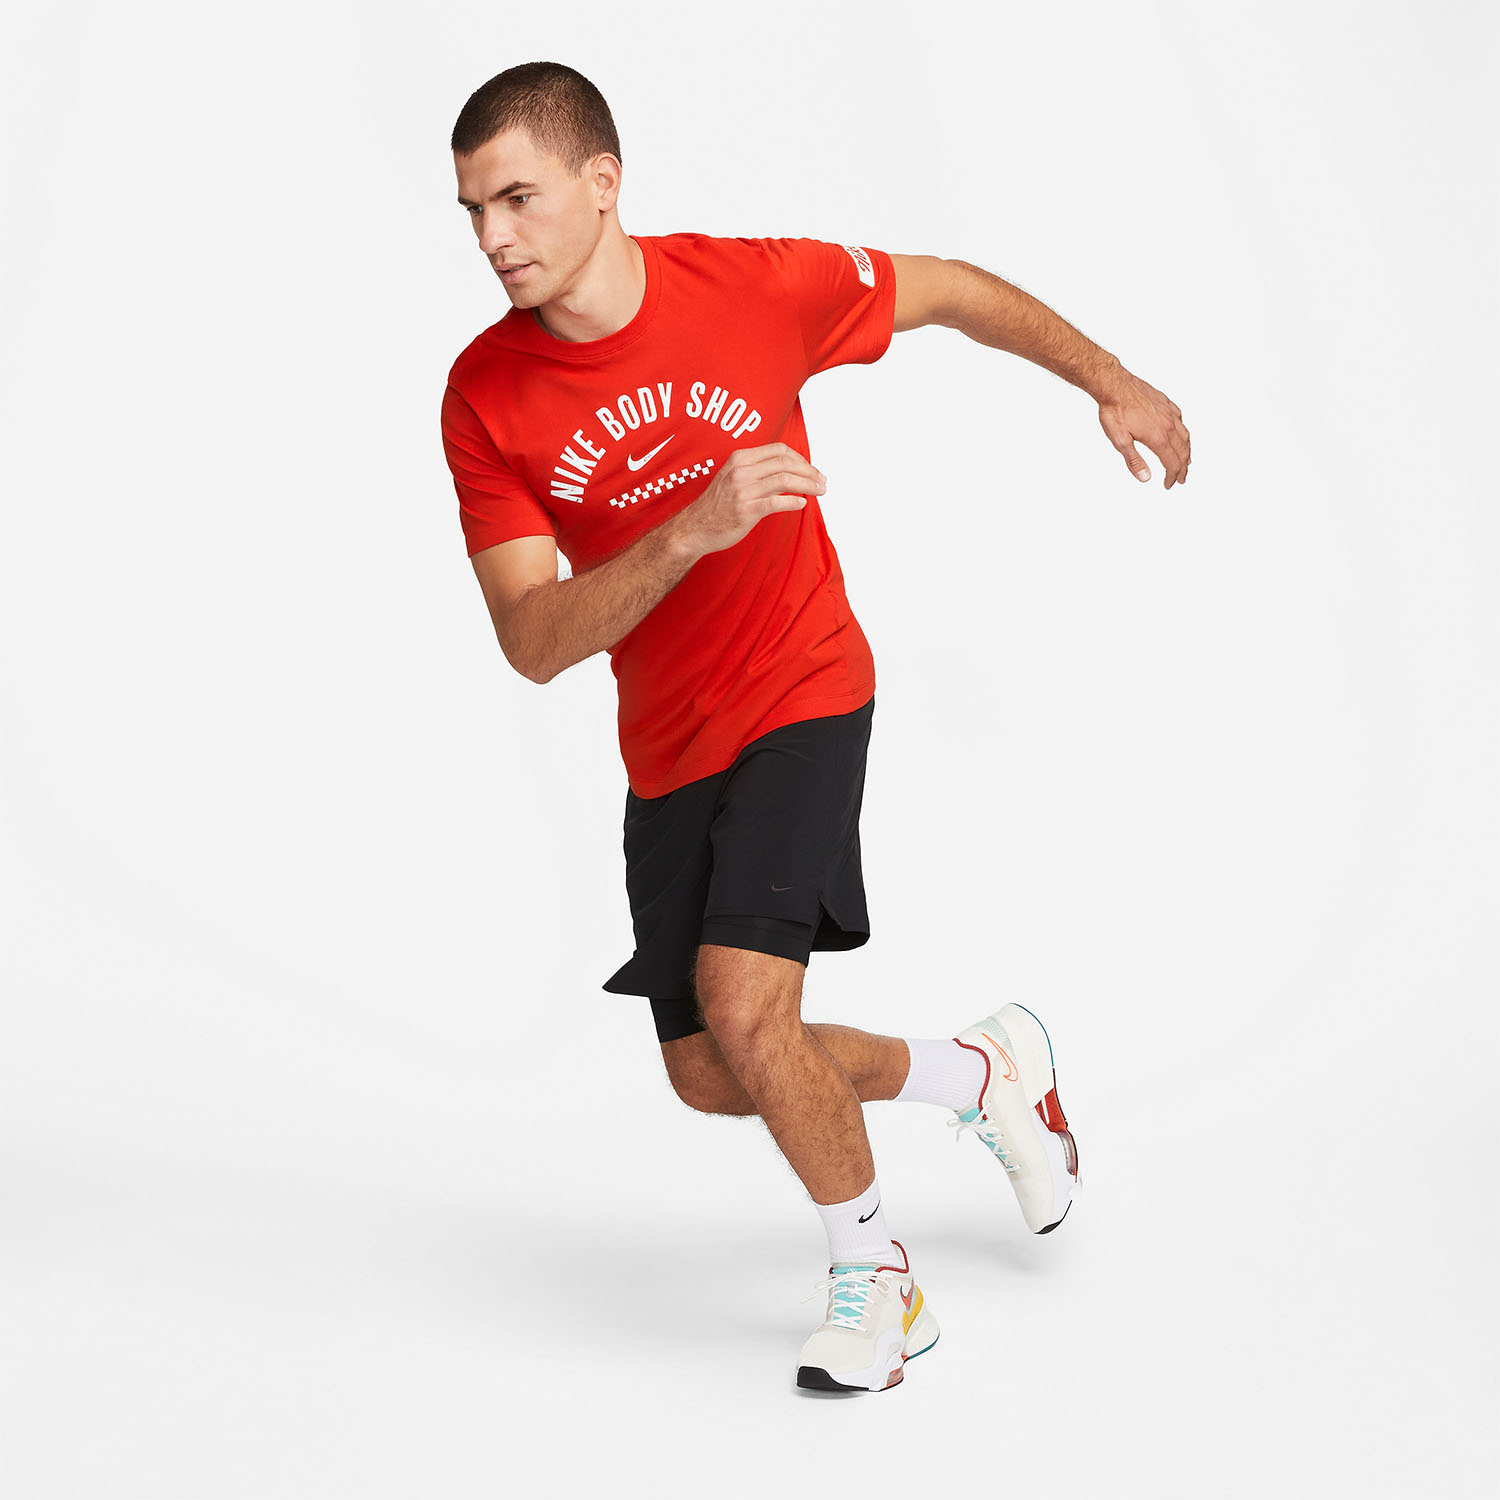 Nike Dri-FIT Body Shop T-Shirt - Picante Red